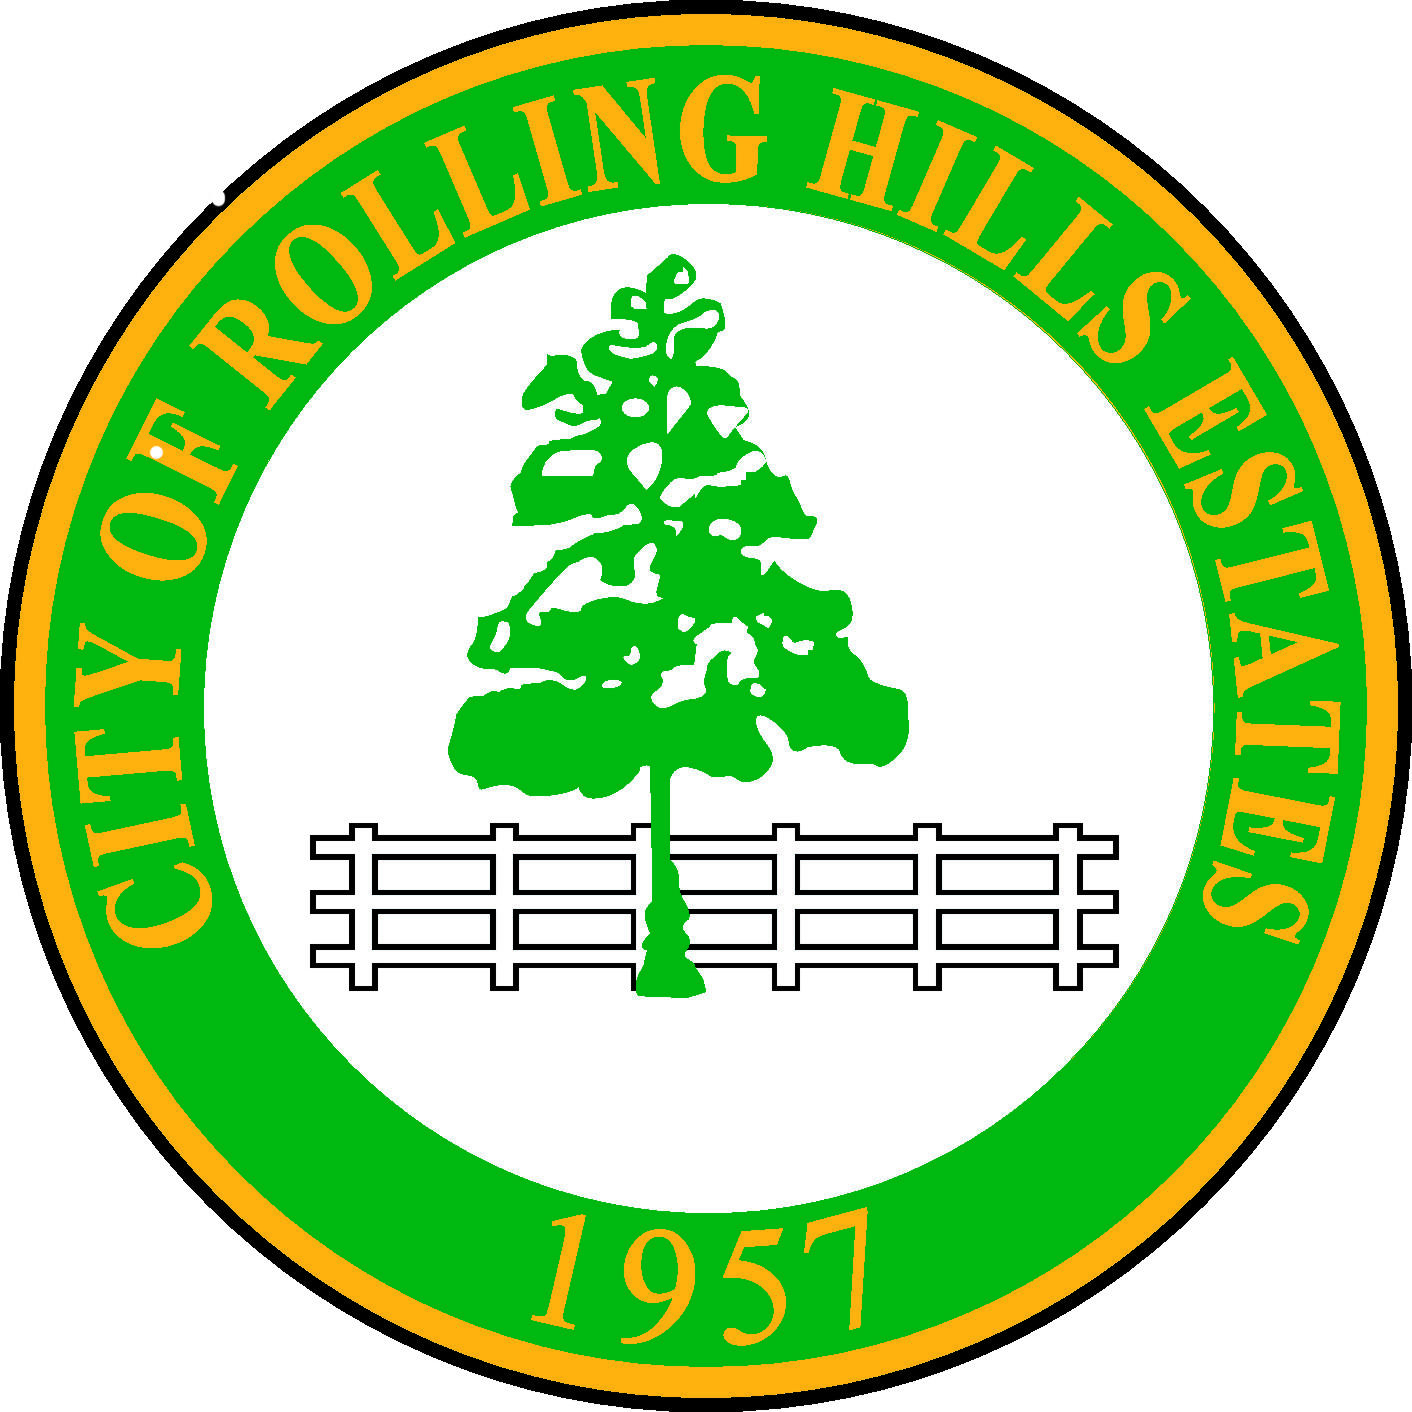 Rolling Hills Estates logo